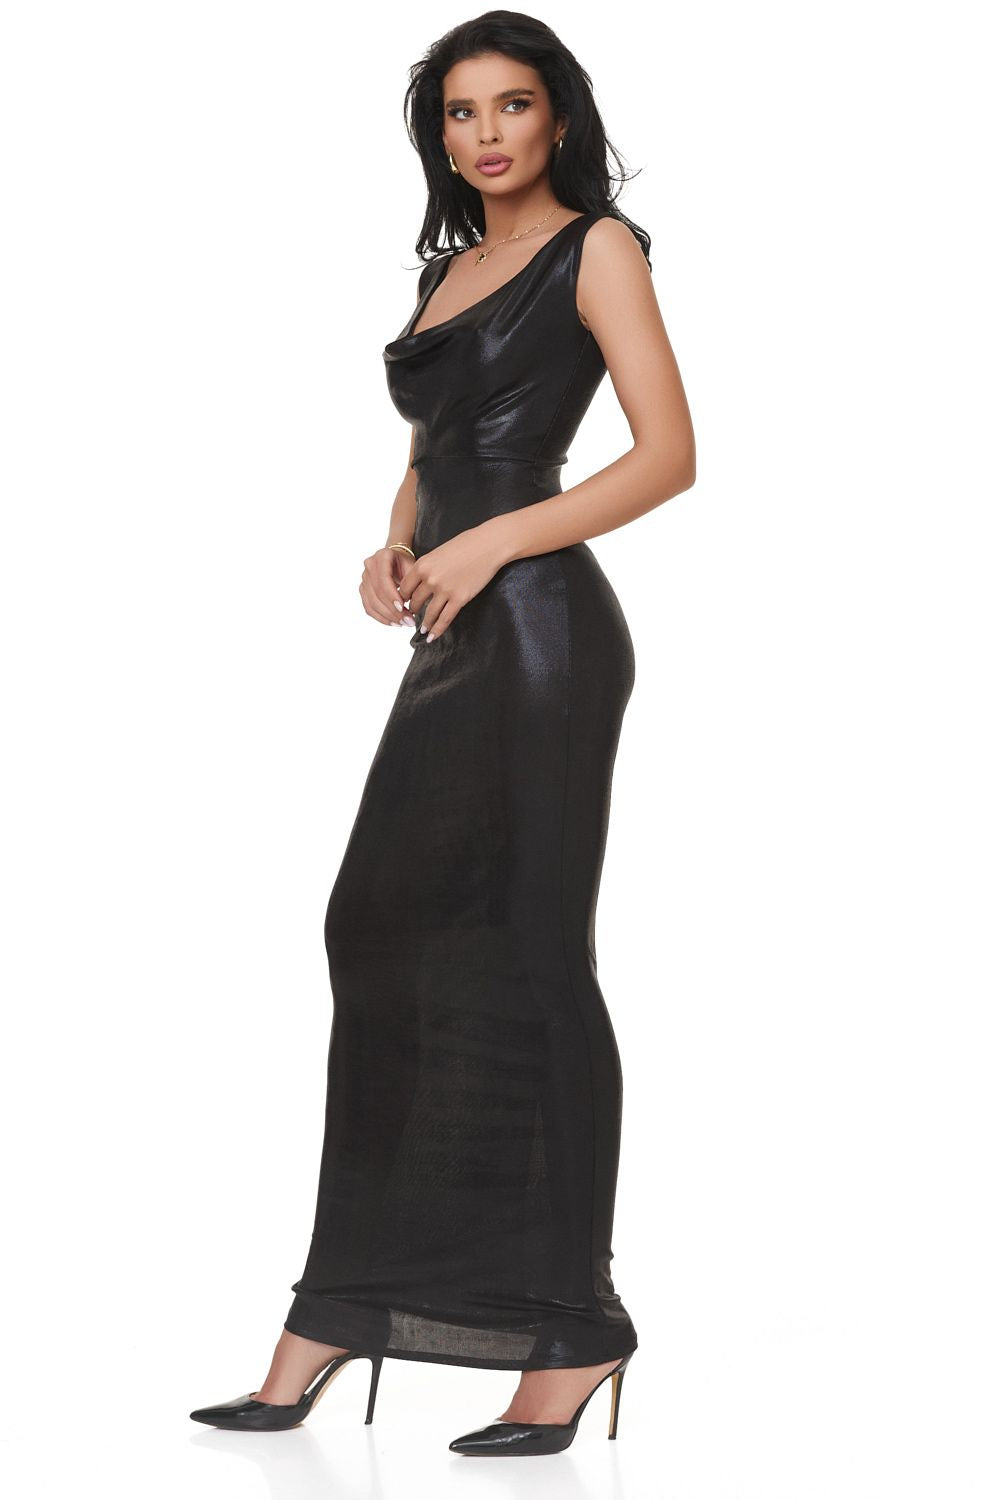 Printezel Bogas long black dress for ladies